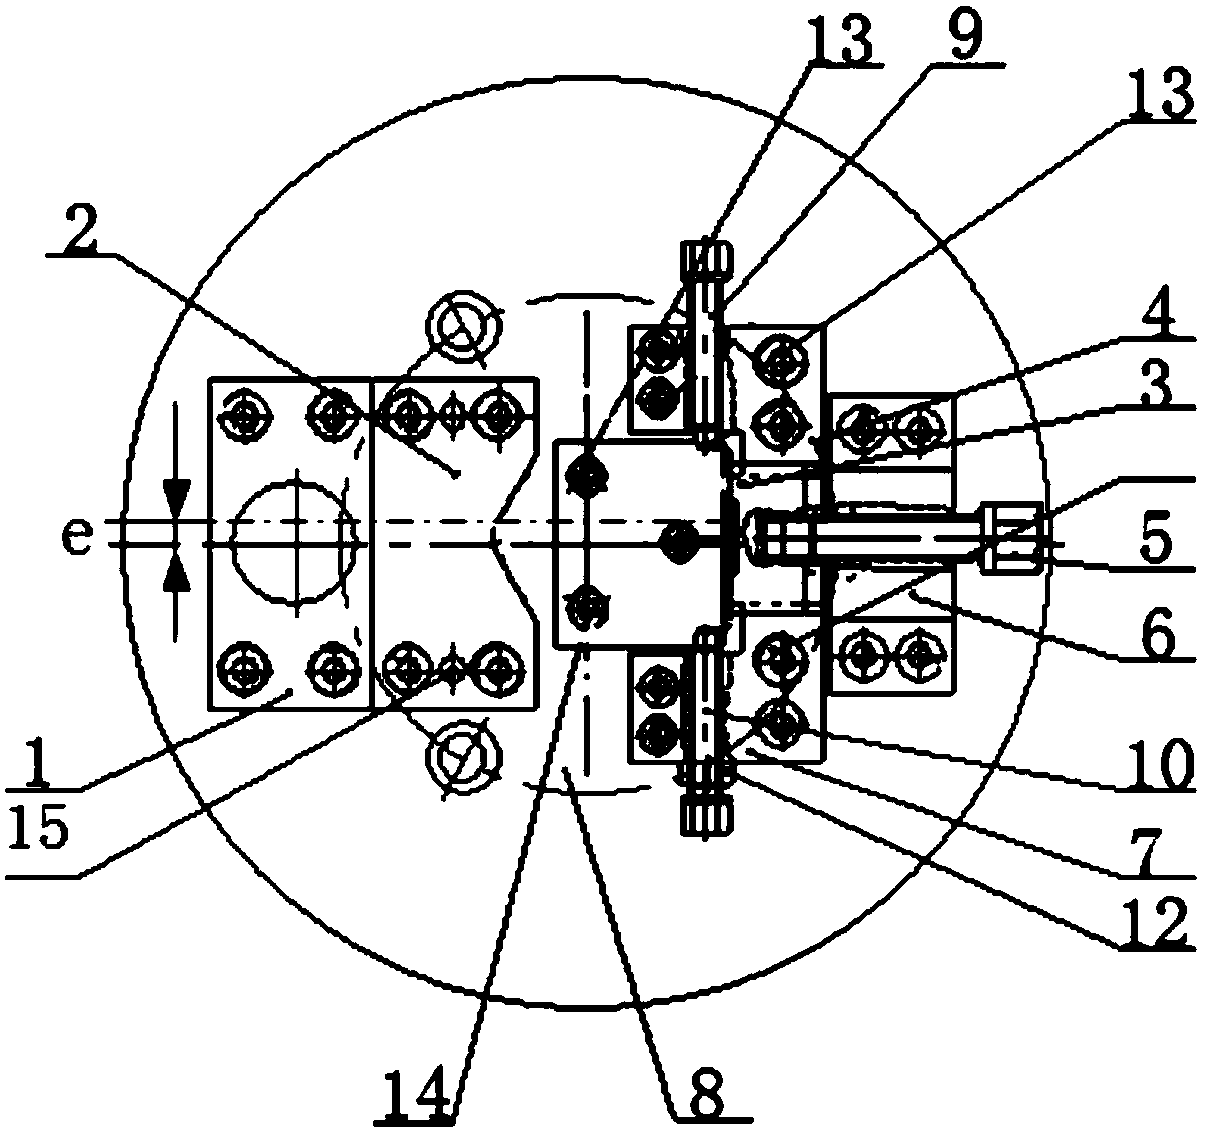 Turning center clamp of irregular eccentric valve deck